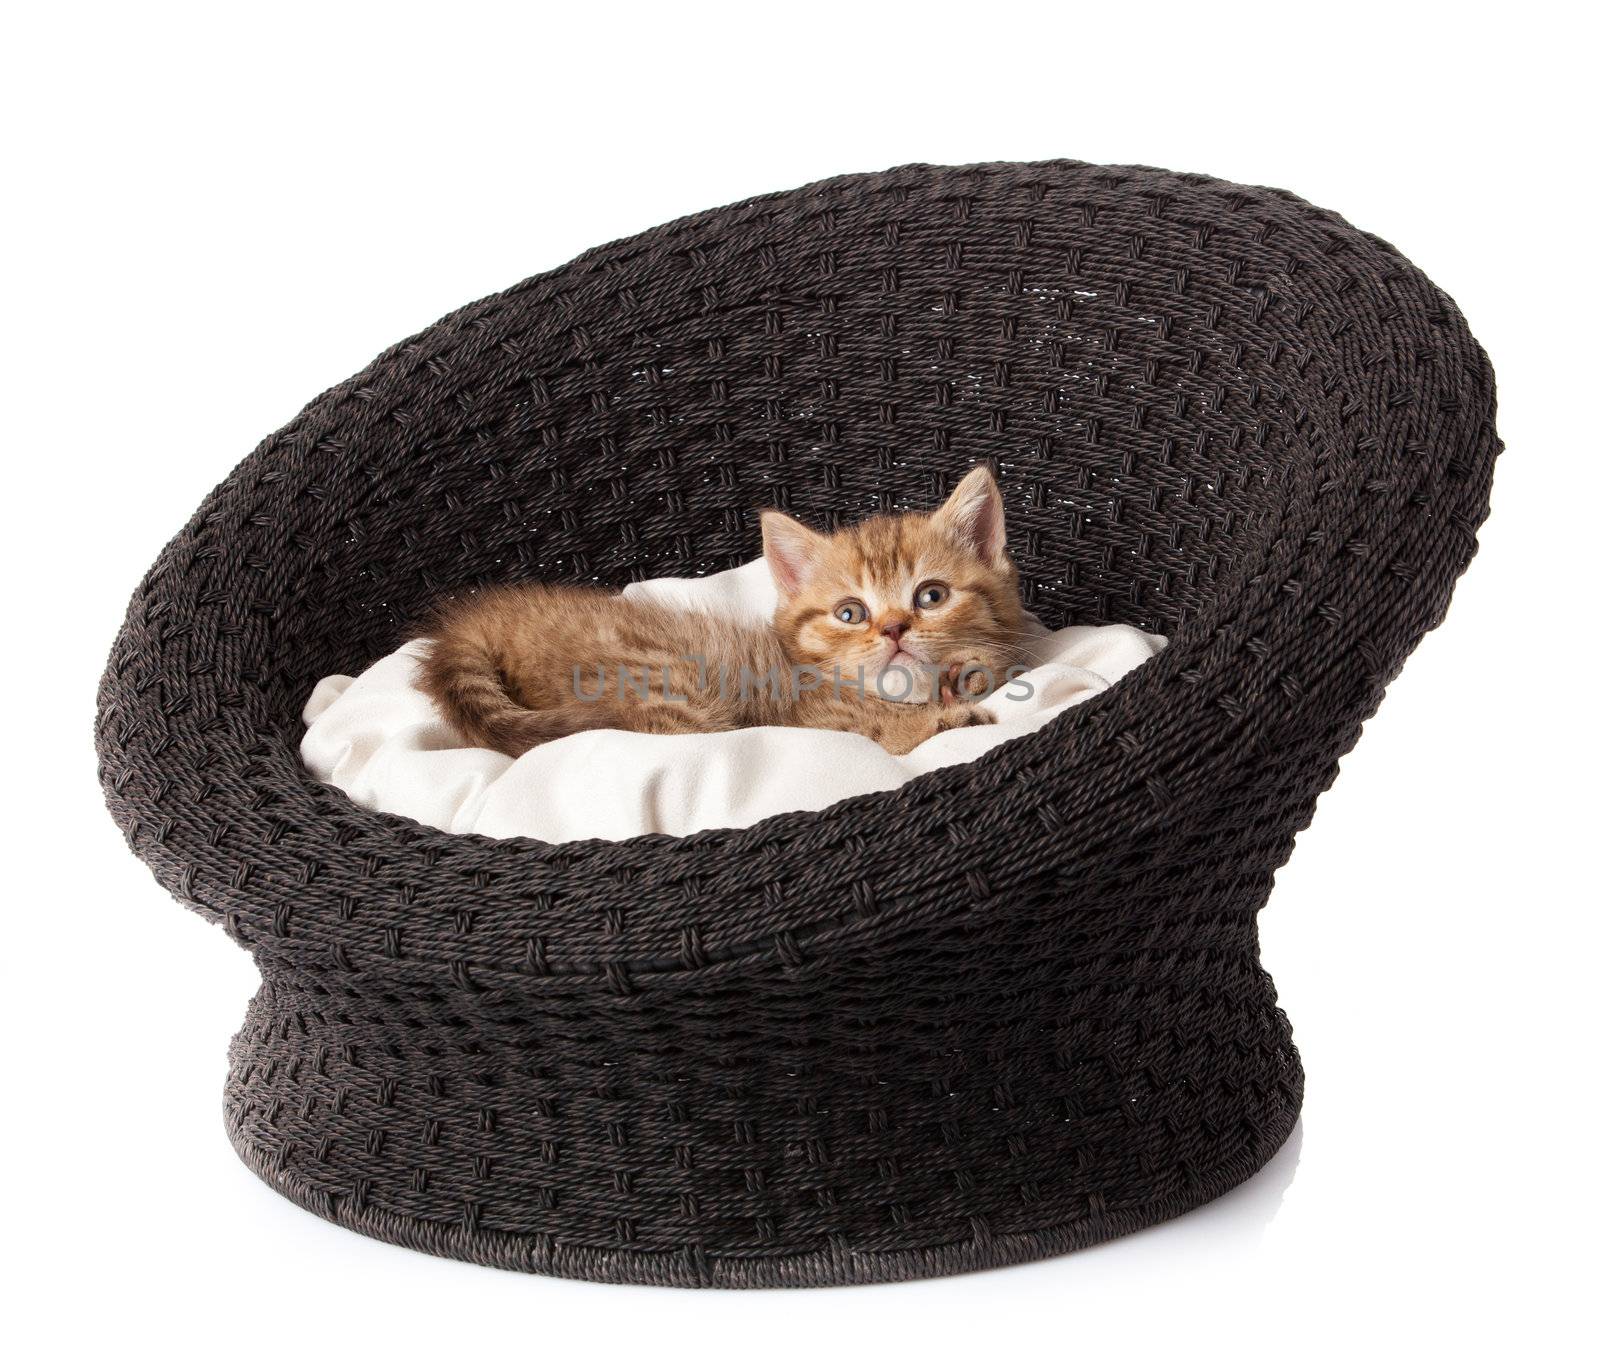 Cat sleeping in the basket